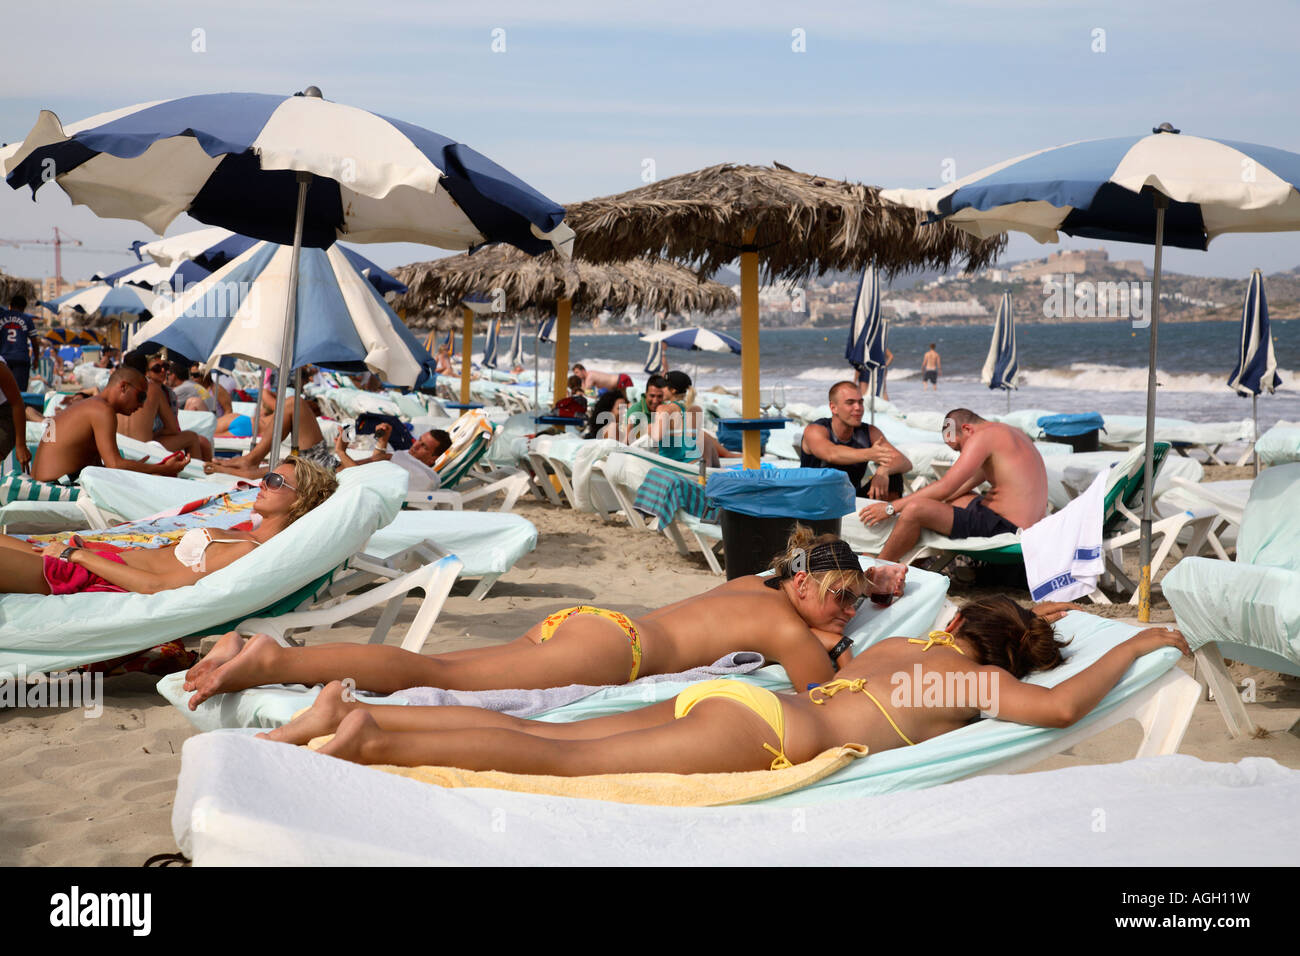 Bora Bora Beach Ibiza High Resolution Stock Photography And Images Alamy